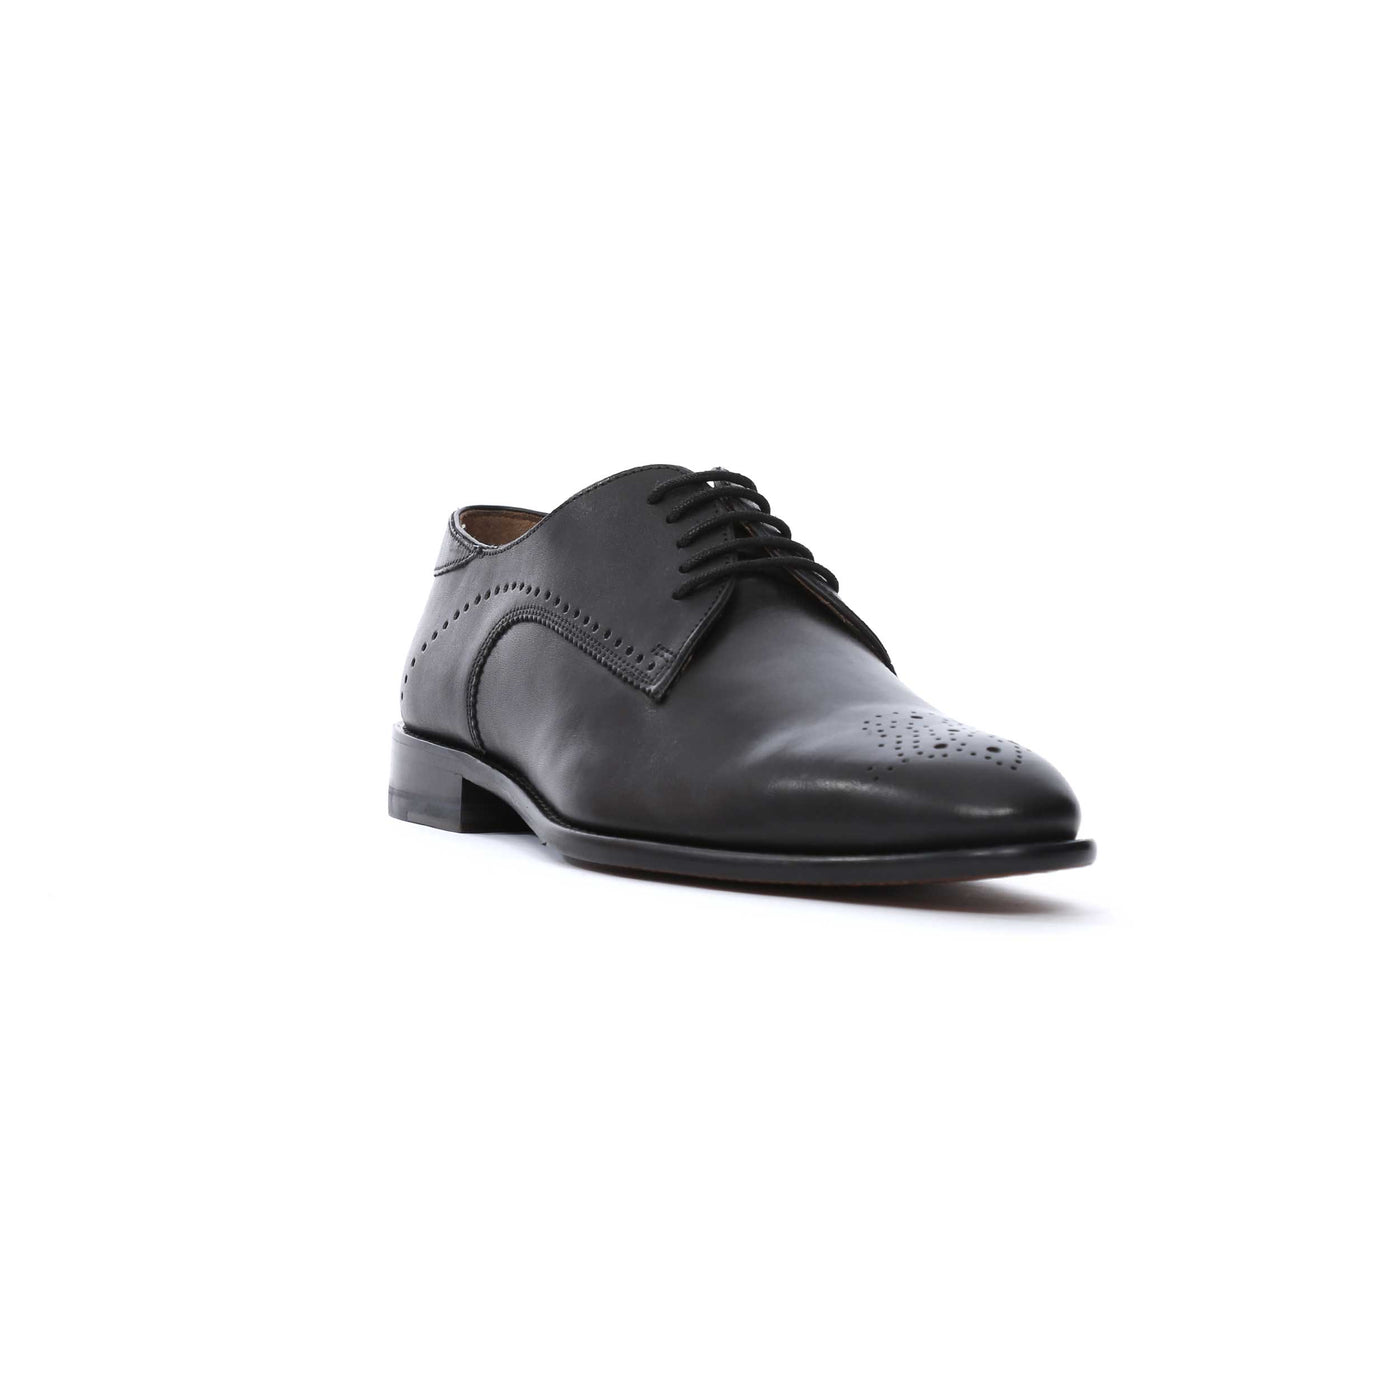 Oliver Sweeney Harworth Shoe in Black Toe